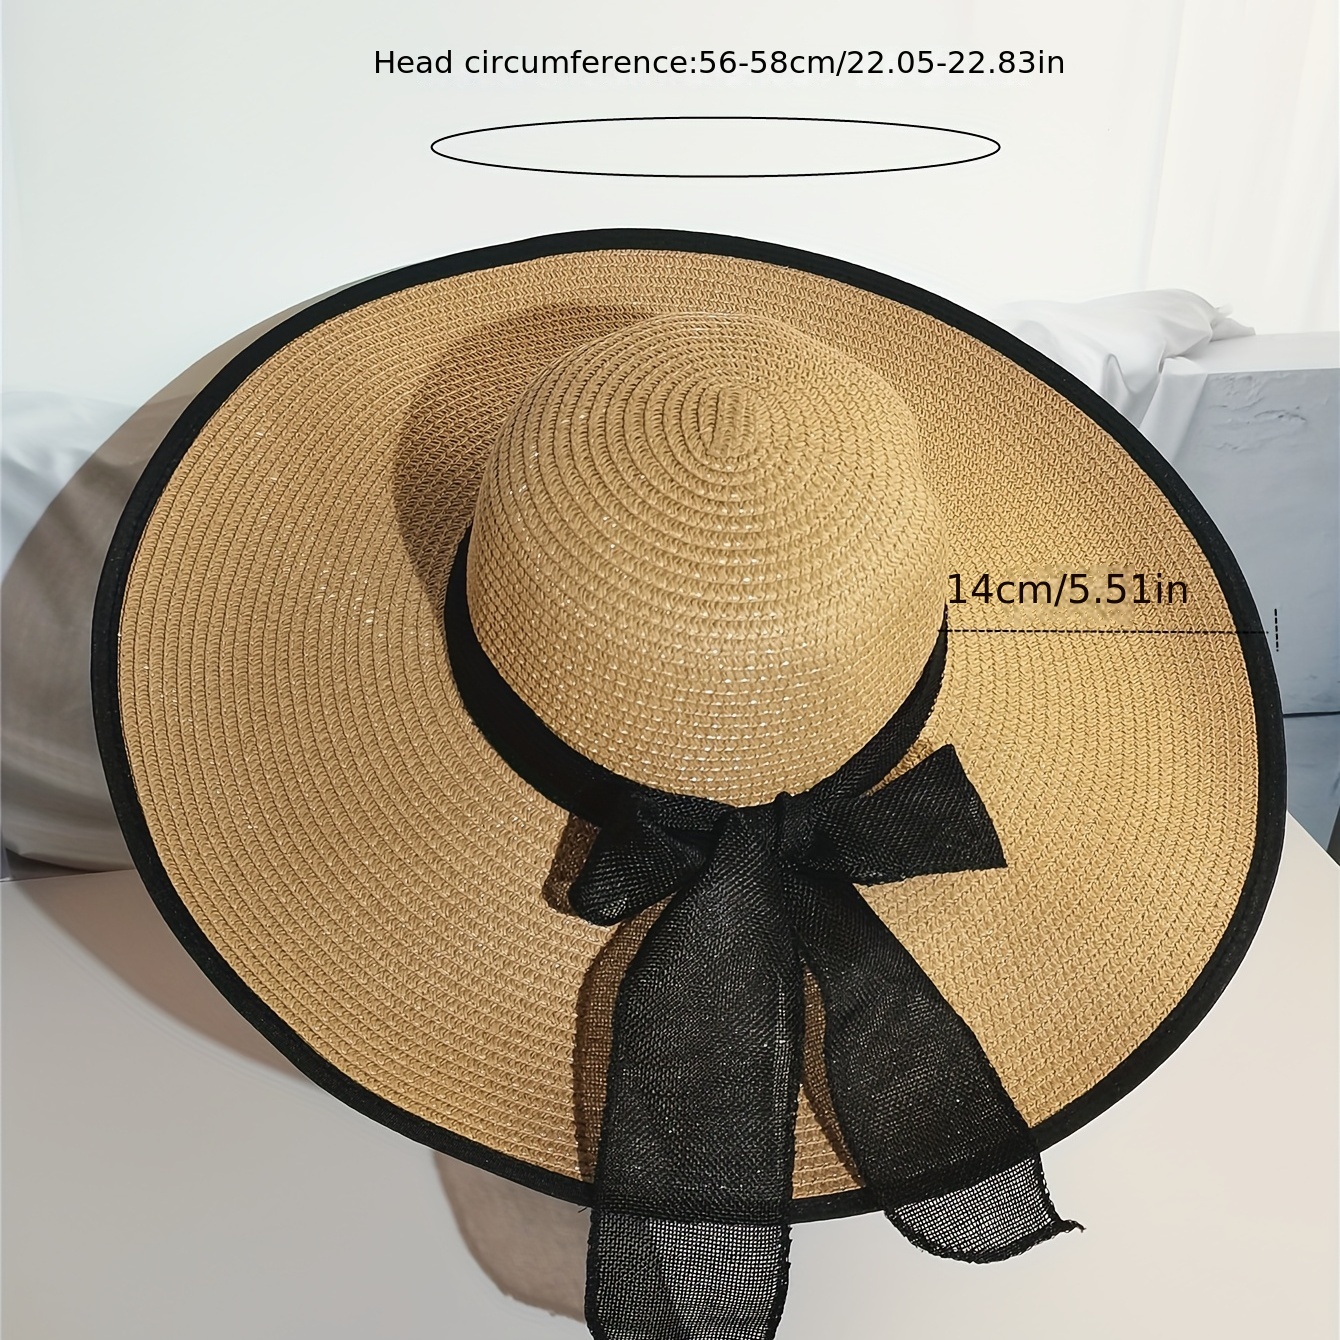 Large Brim Elegant Floppy Hat, Bow Decor Foldable Beach Sunshade Straw Hat, Women's Caps & Hats